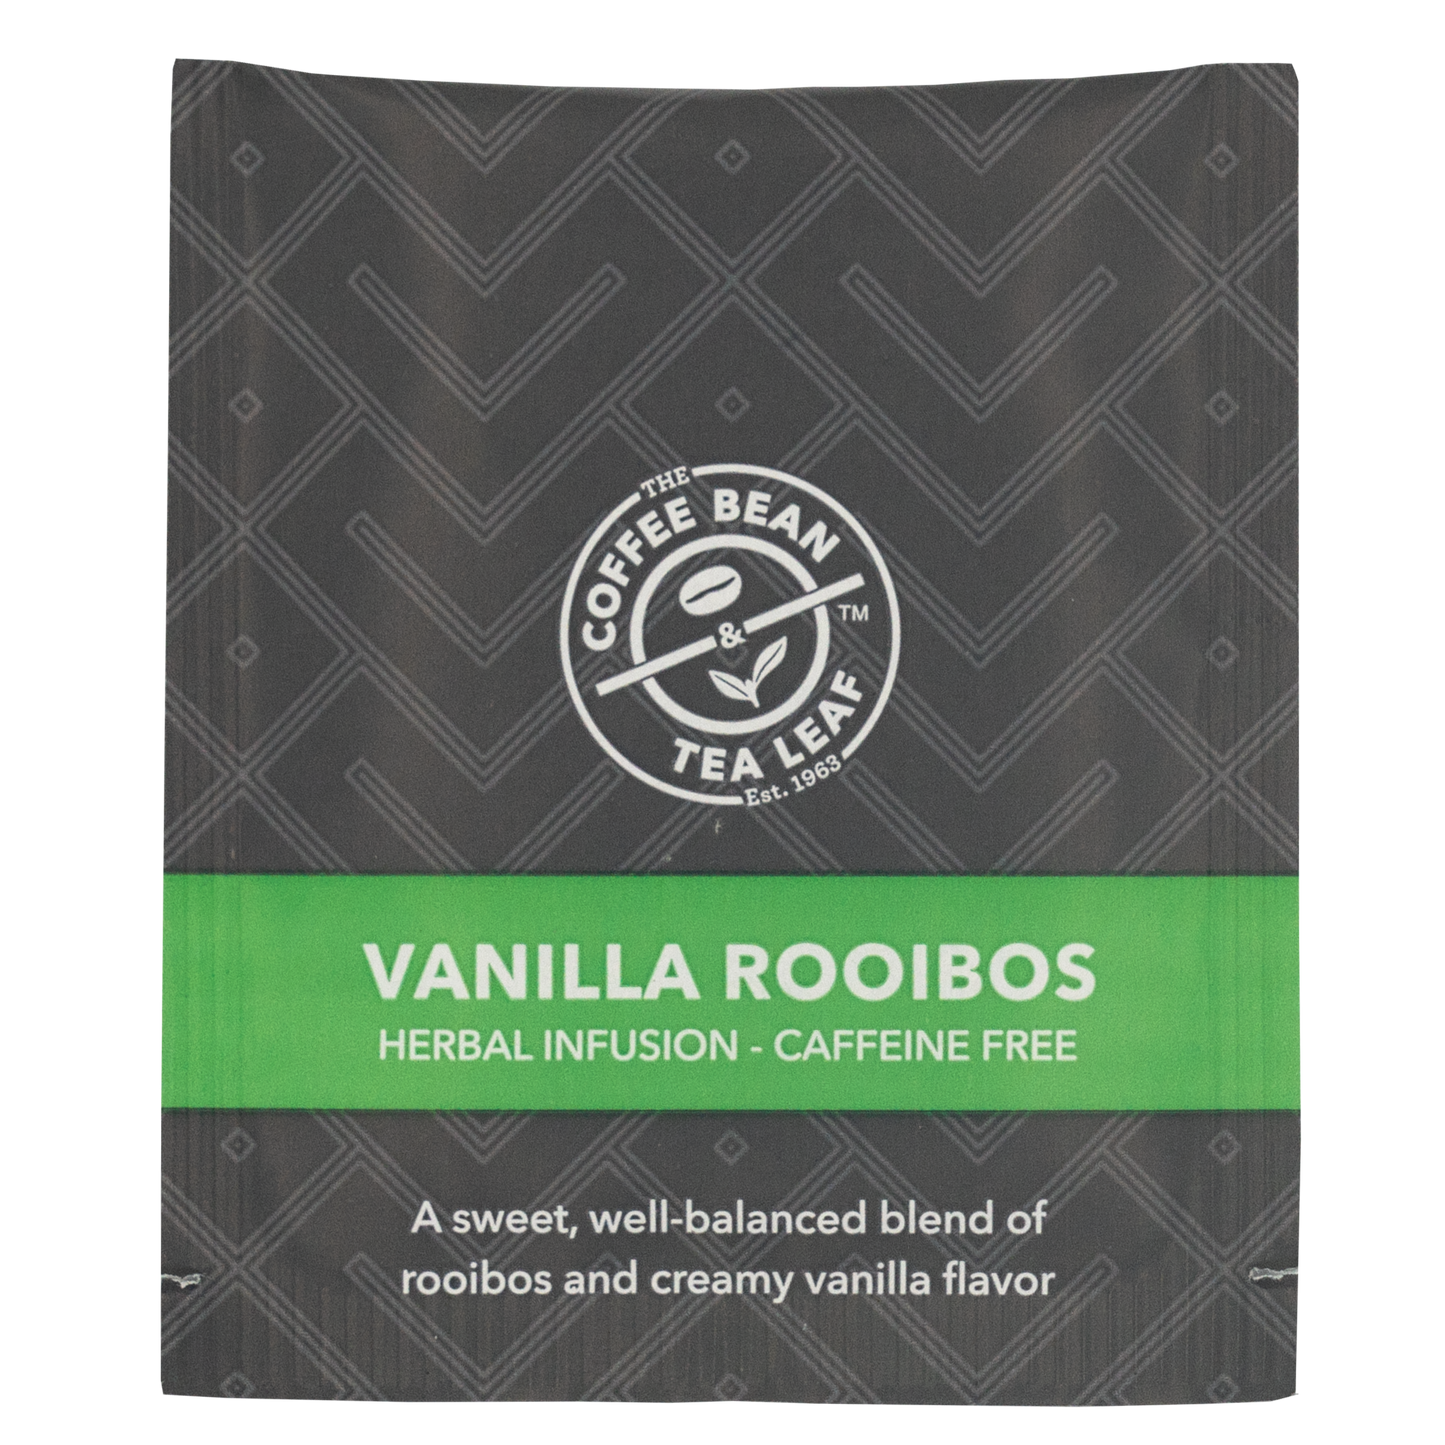 CBTL Vanilla Rooibos Tea Bag